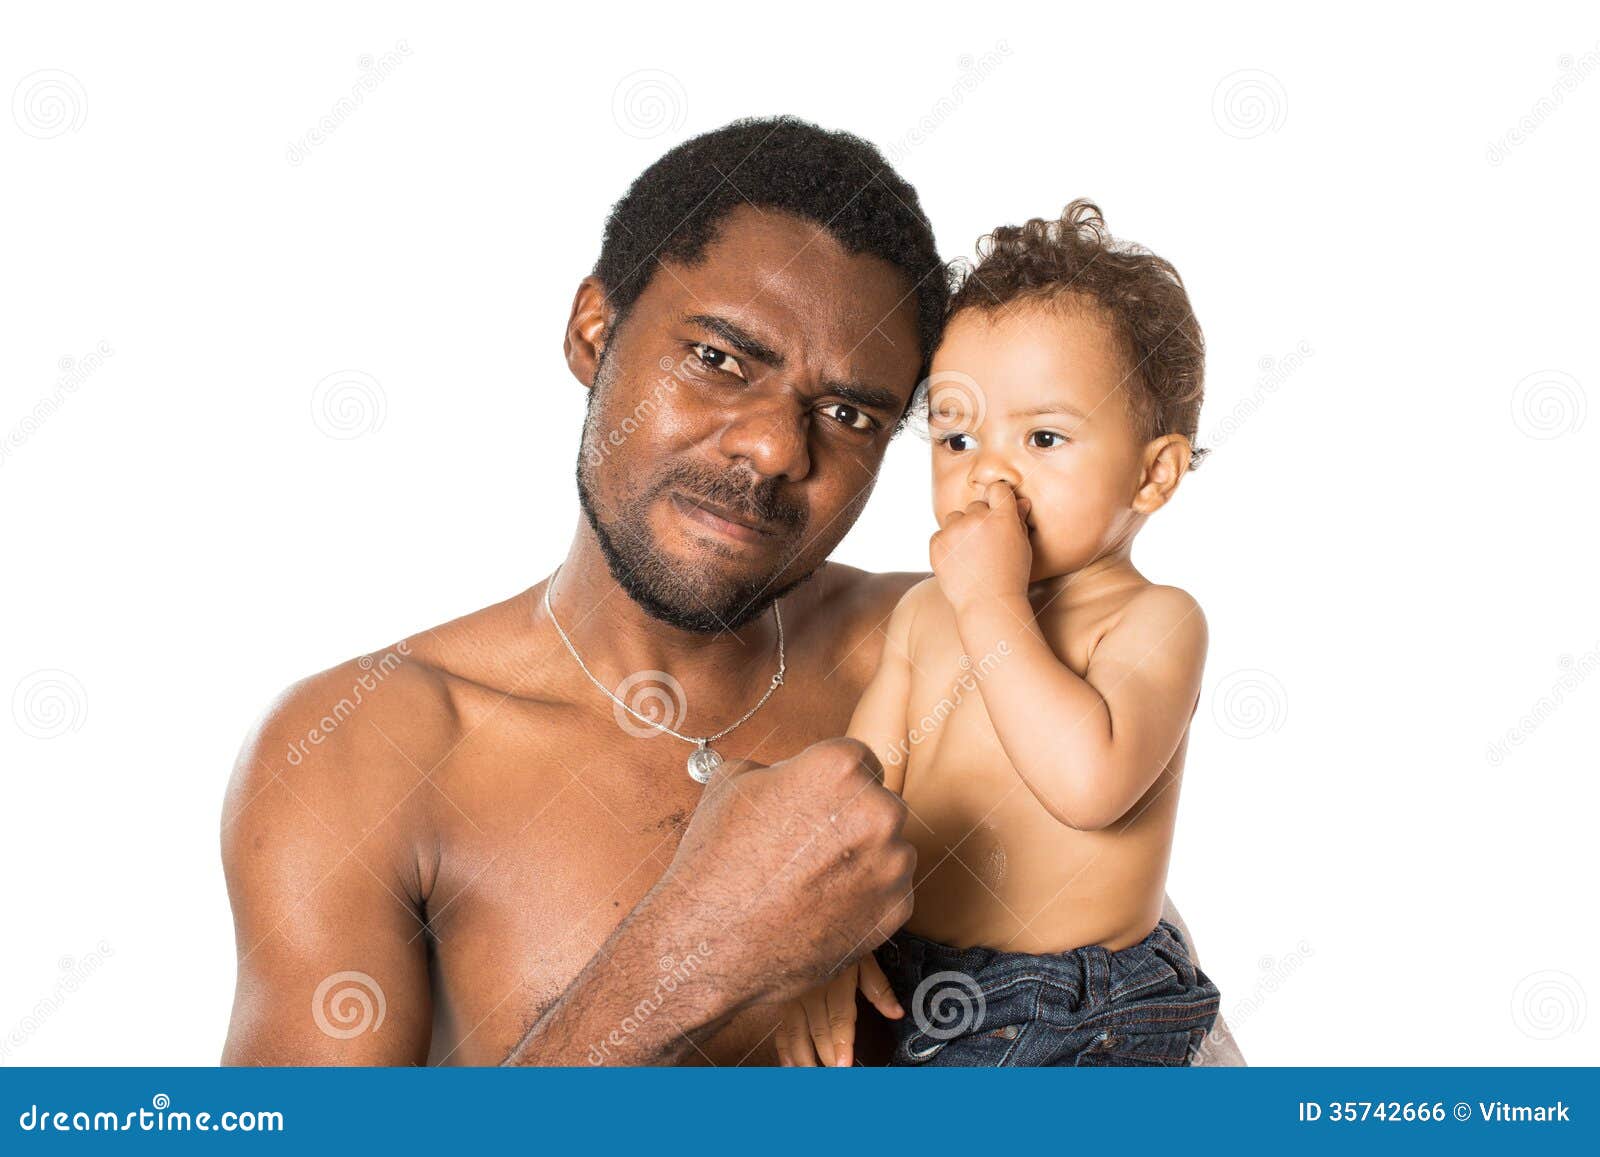 White dad black baby